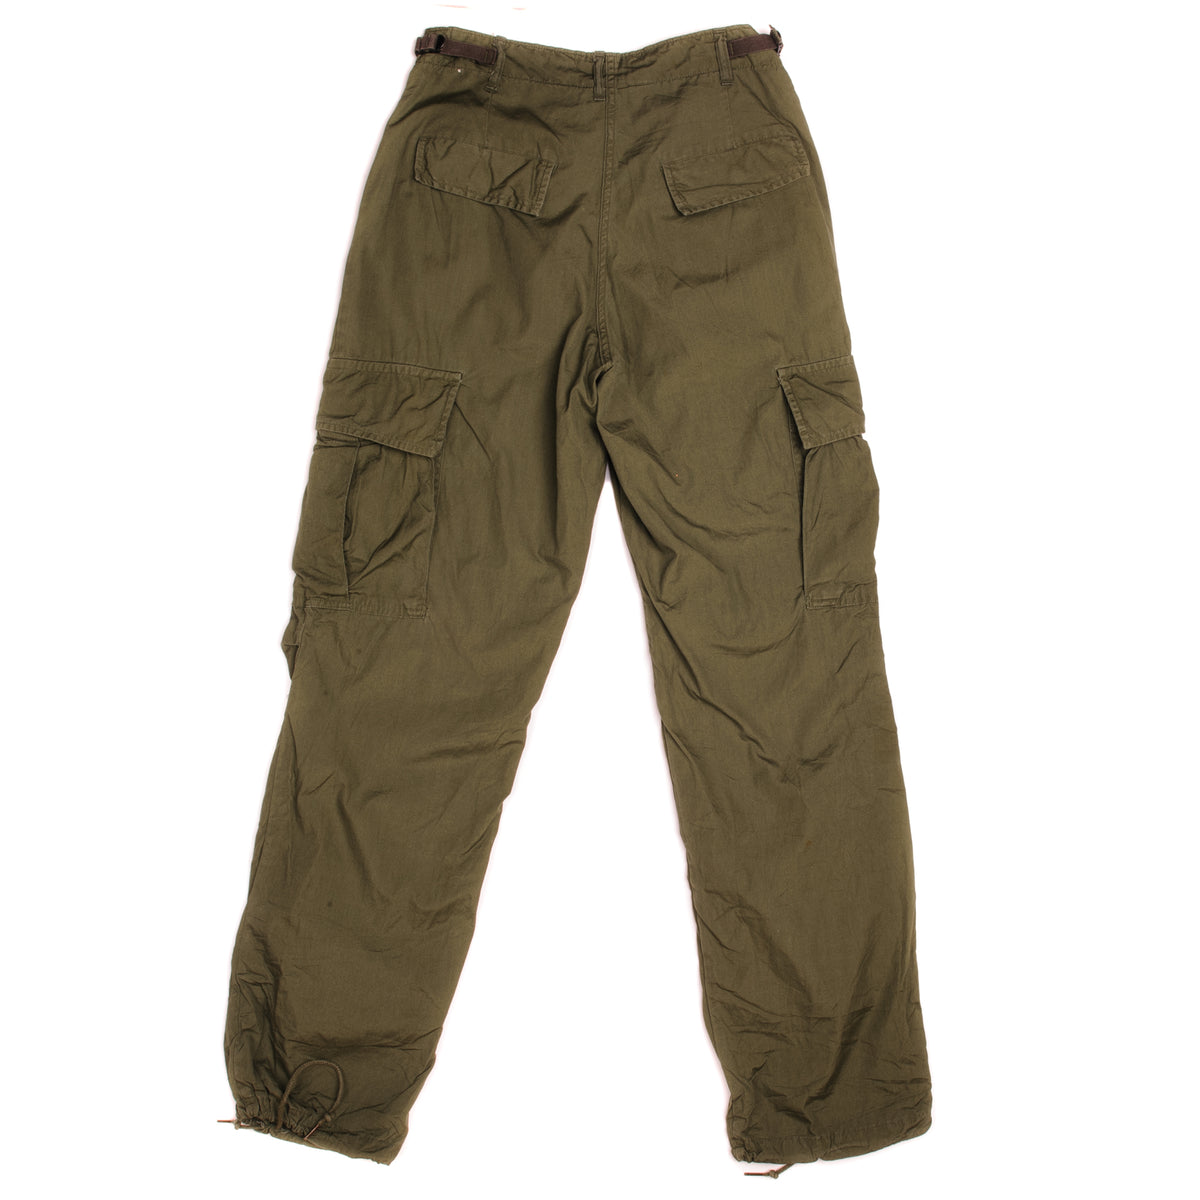 Vintage US Army Combat Pants | Buy Combat Pant Online | Rare Gear USA